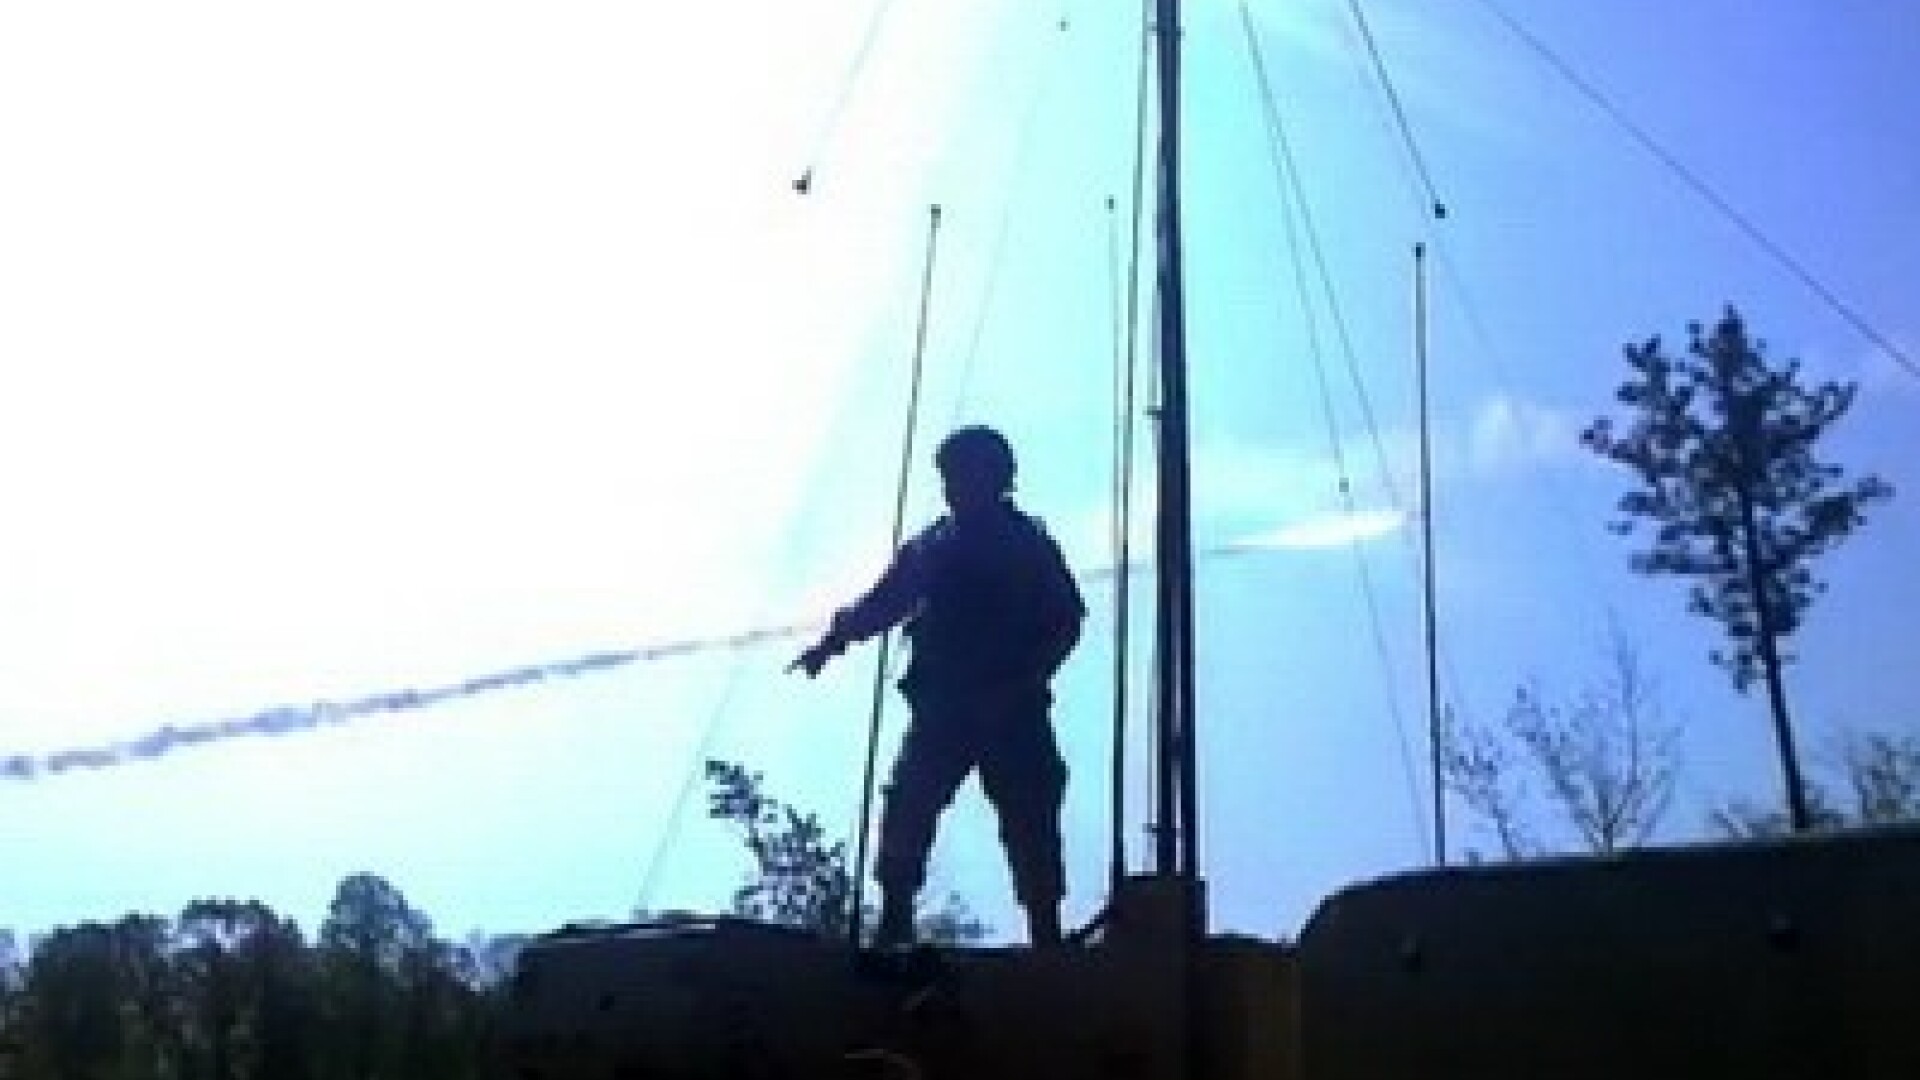 Soldat care danseaza pe sub rachete